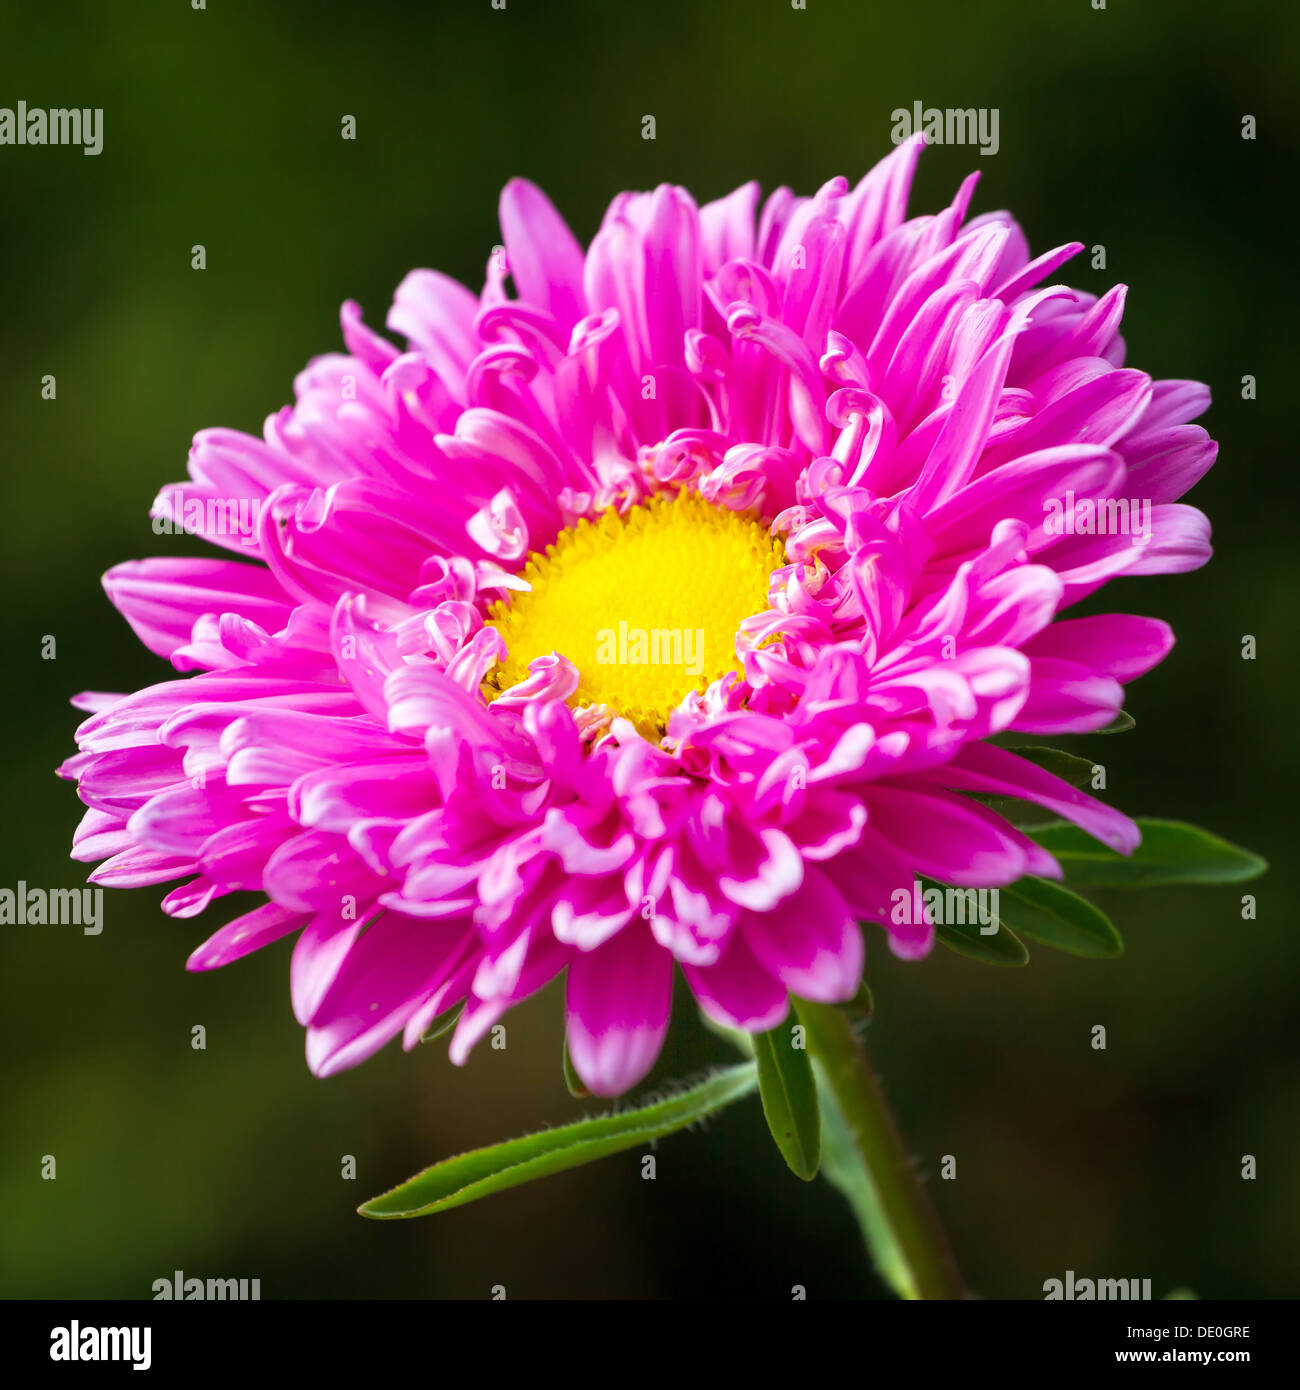 Rosa Chrysantheme Blume closeup Stockfoto